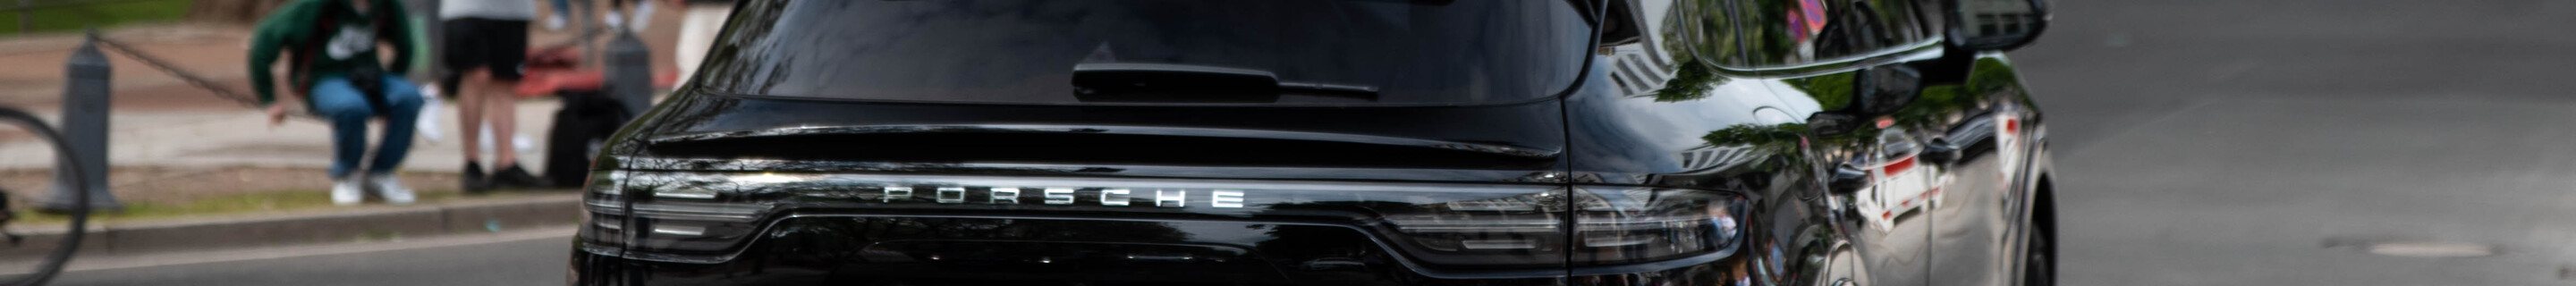 Porsche TechArt Cayenne Turbo S E-Hybrid